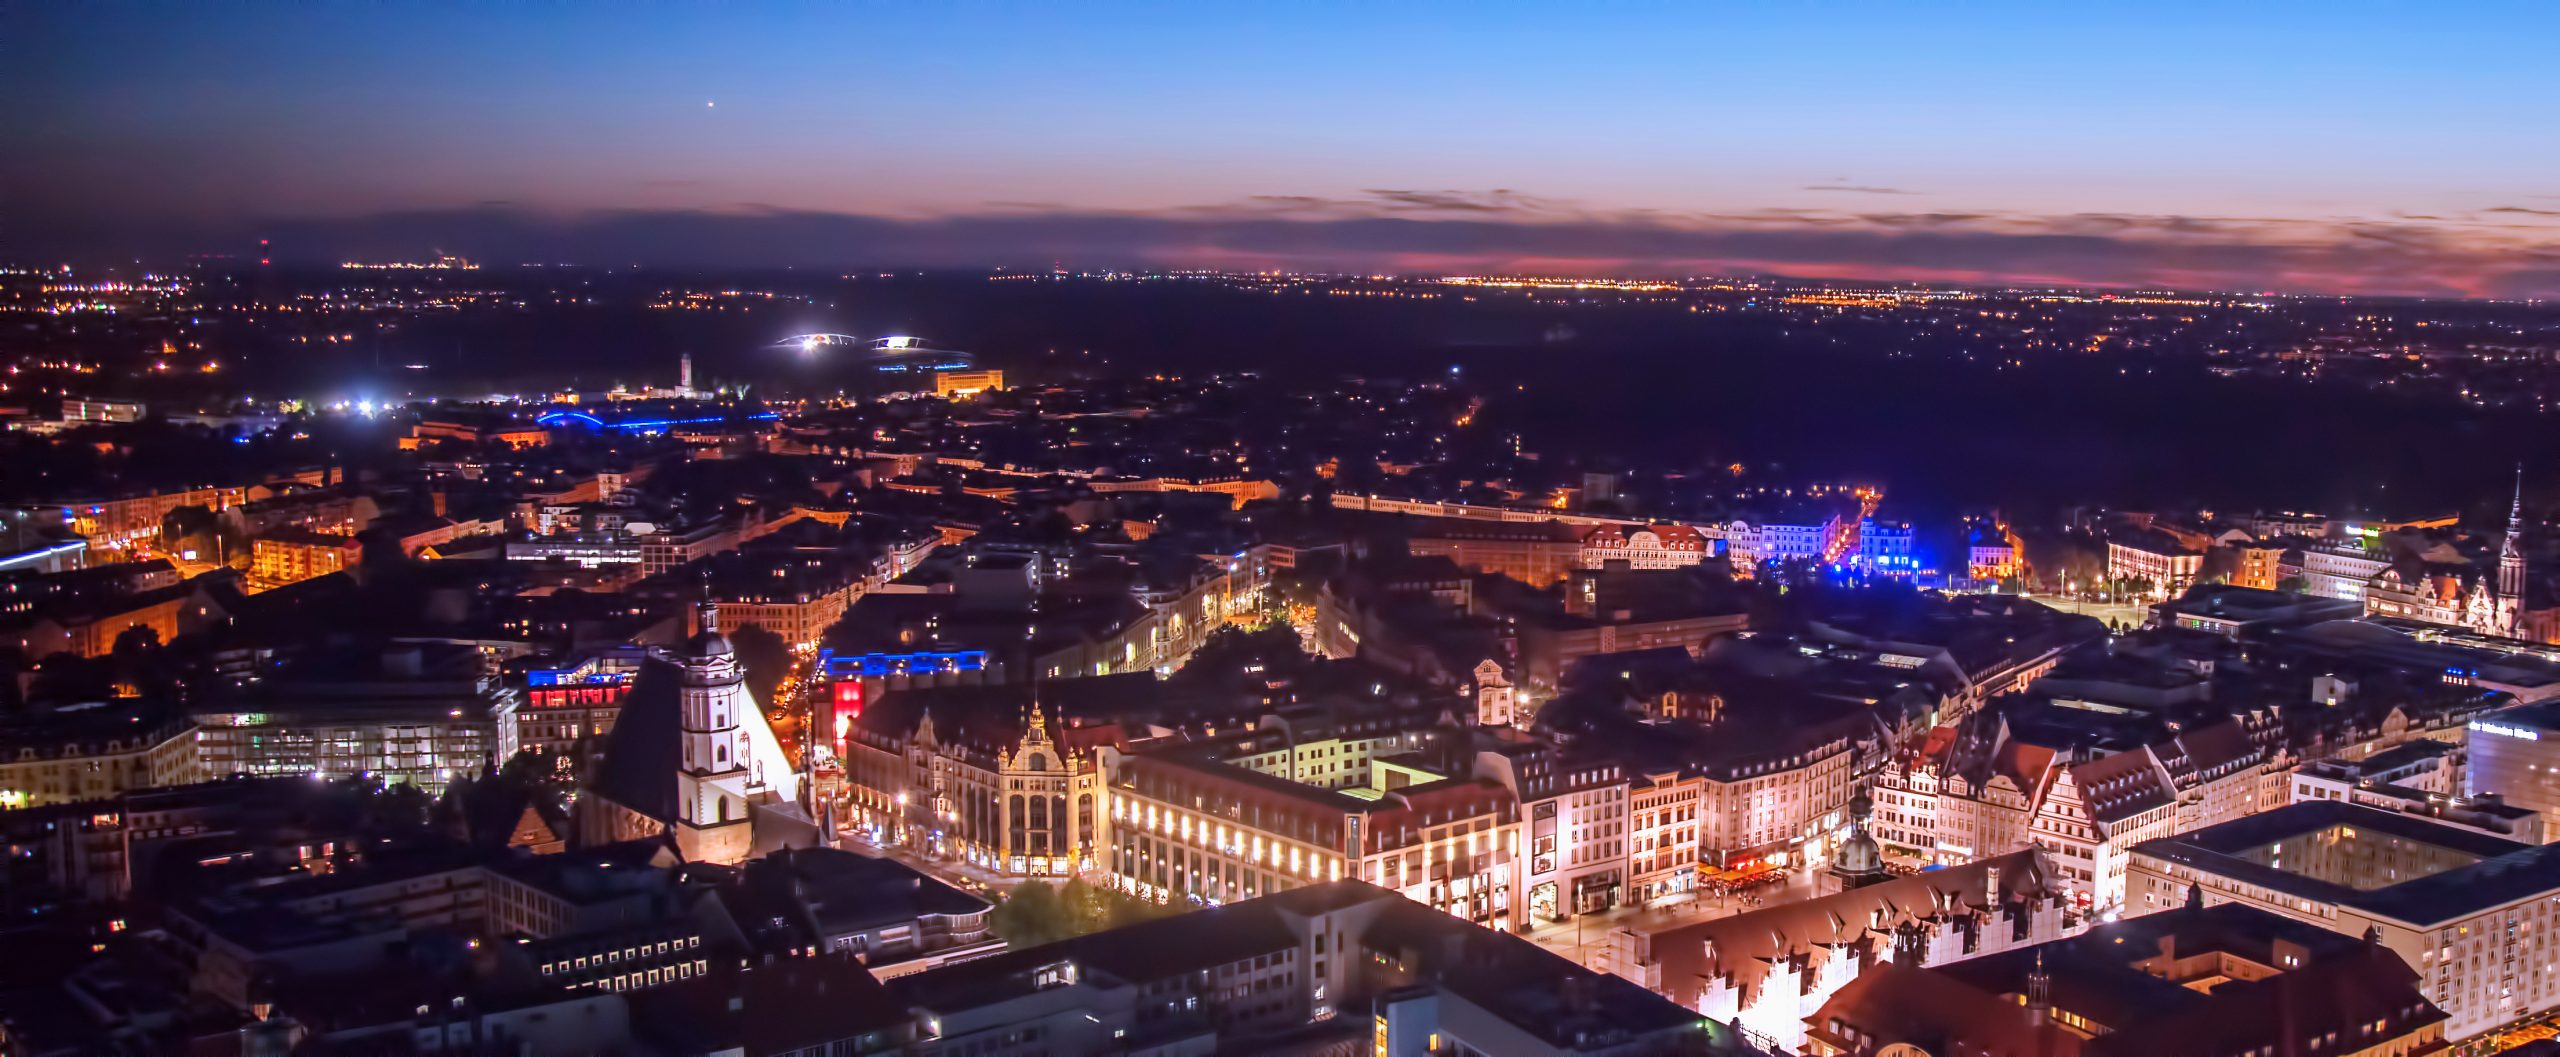 Night panorama of Saxony Germany City Leipzig. Top view. Horizontal image.